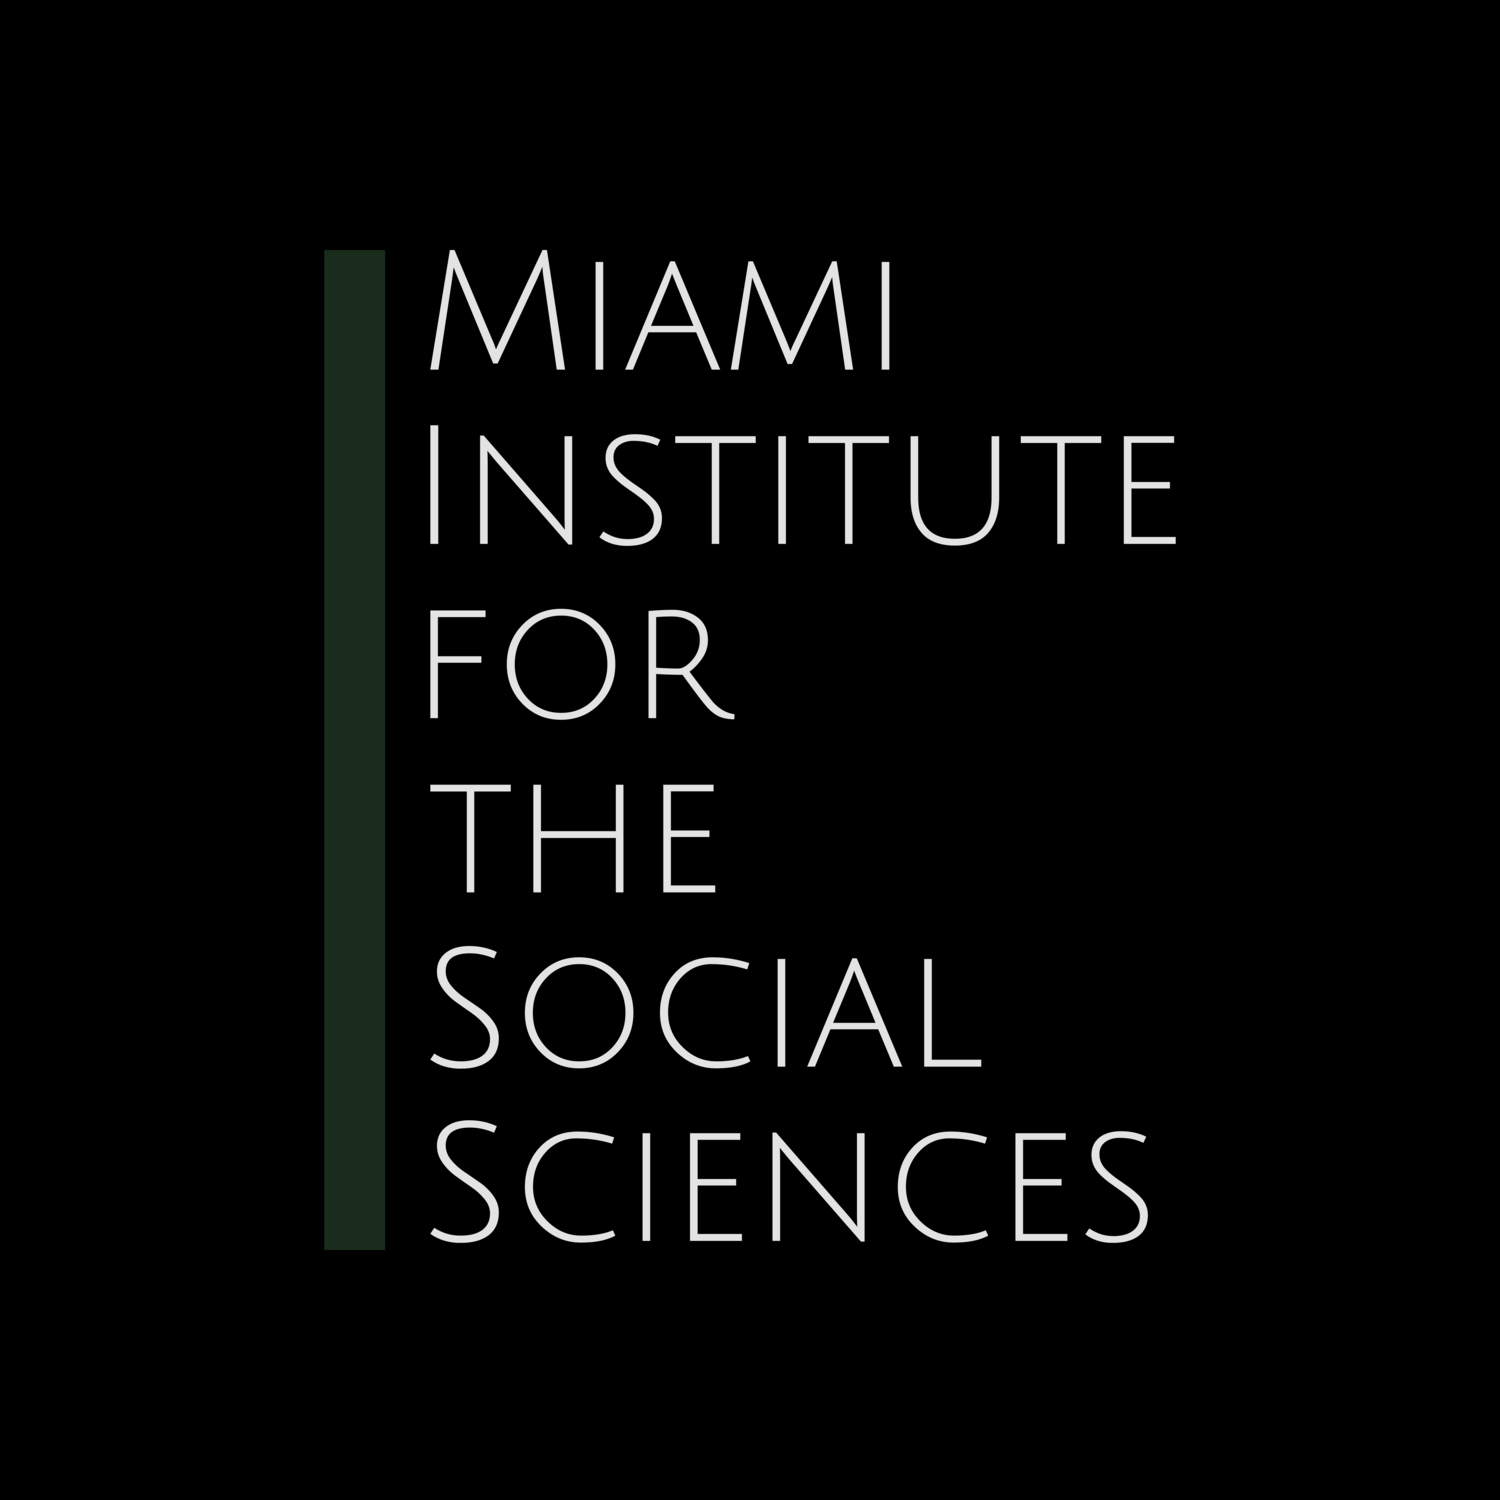 Miami Institute for the Social Sciences